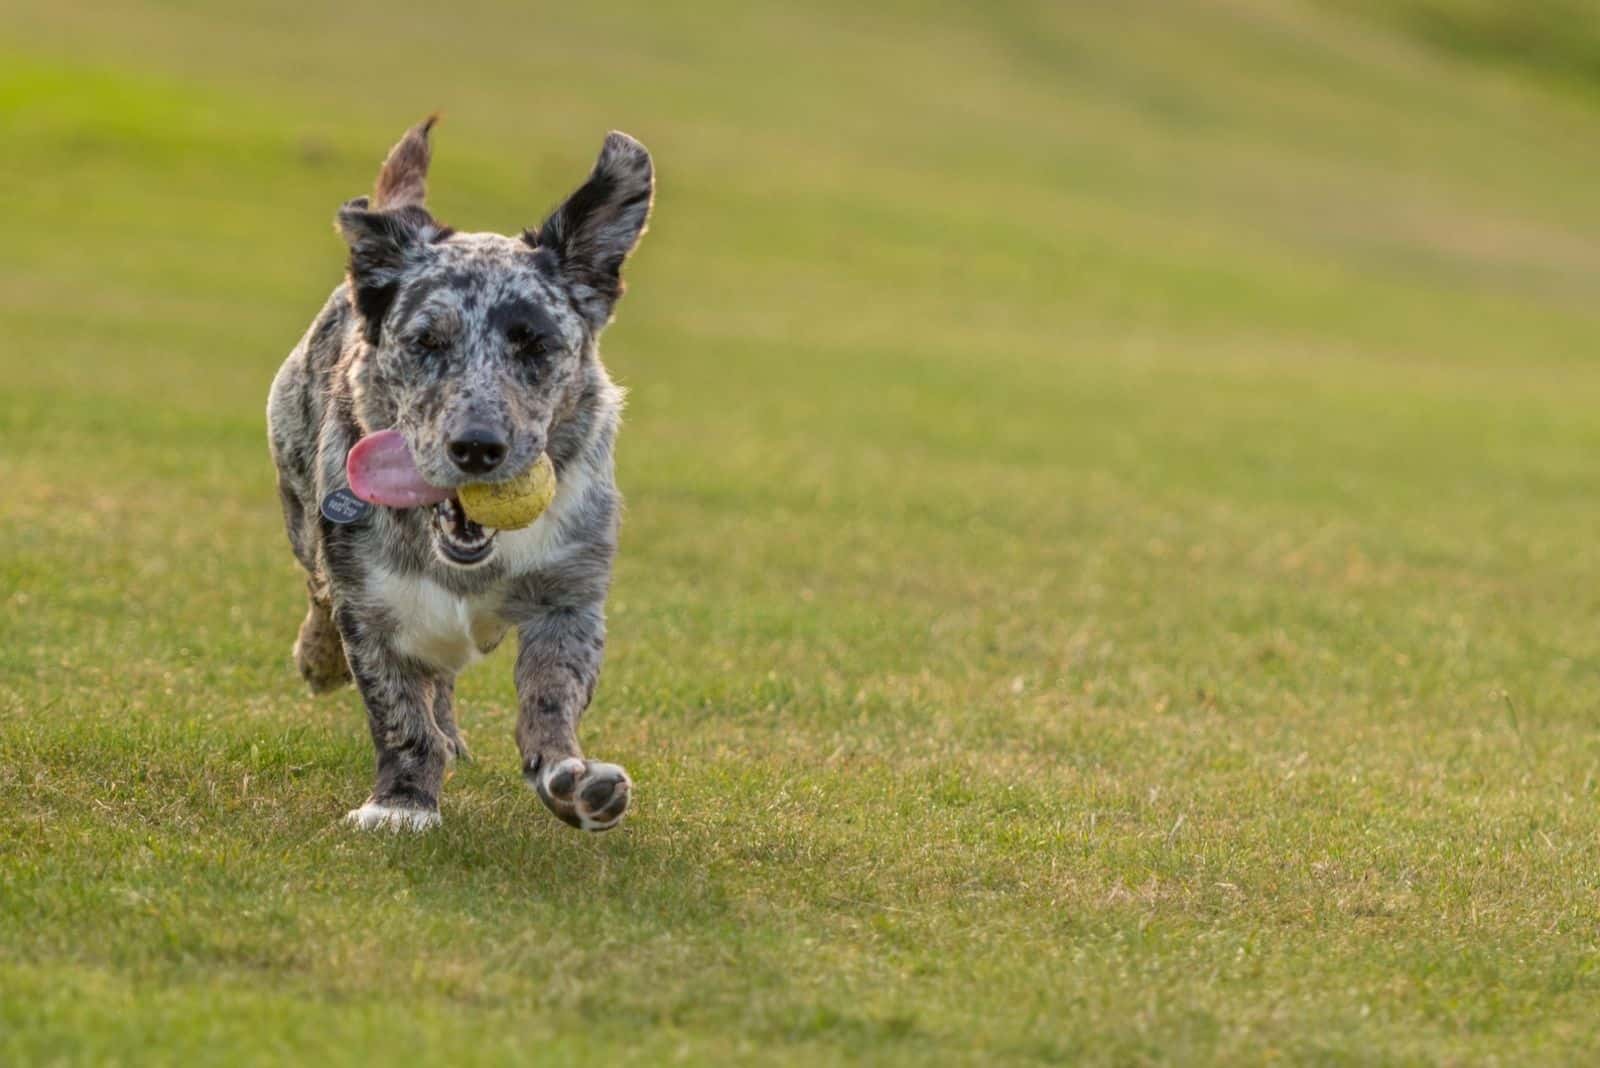 Blue merle collie cross corgi stumpy dog retrieves play ball in field